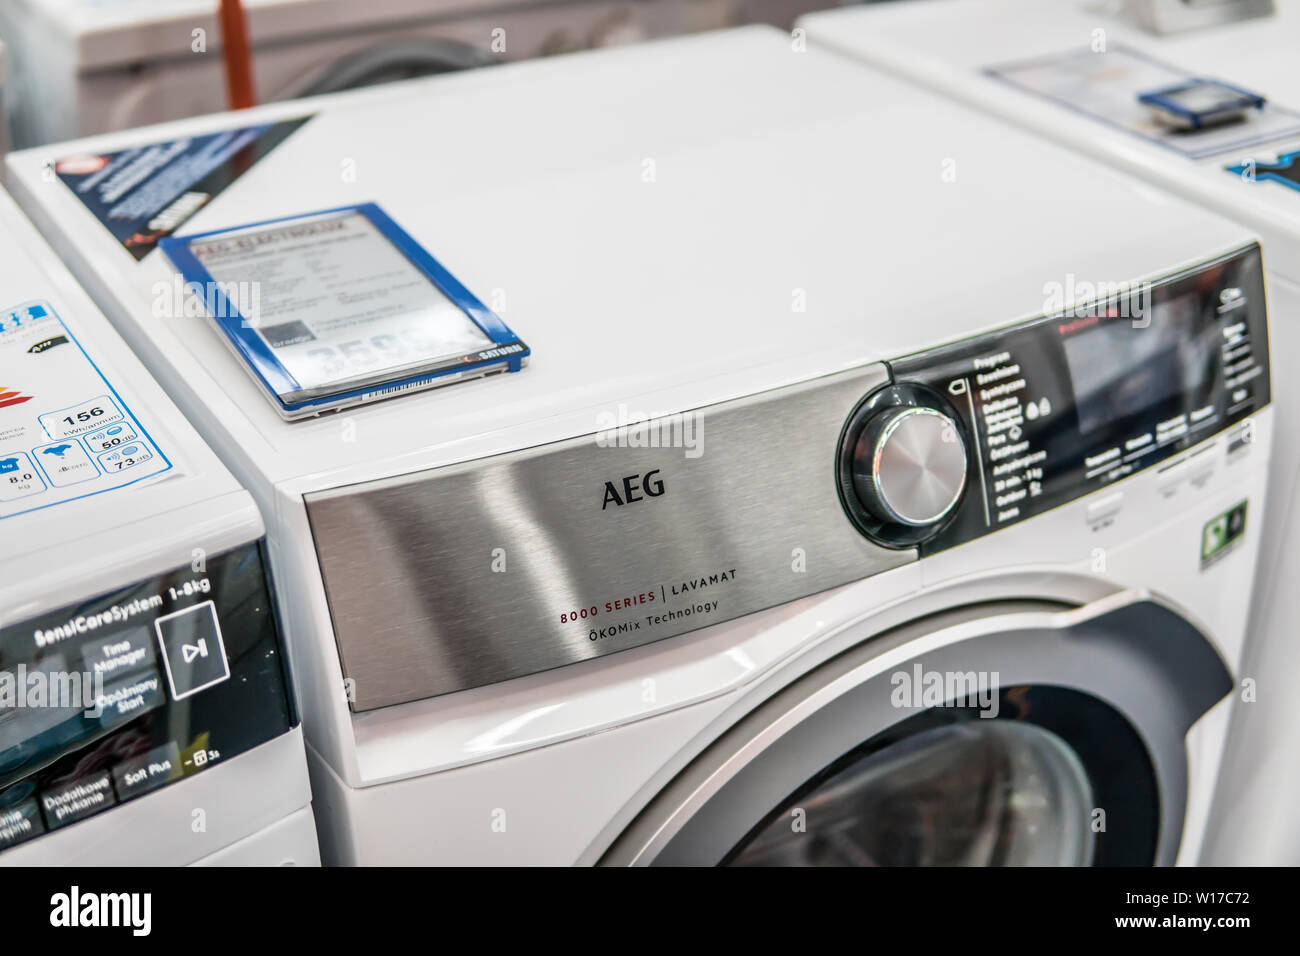 Aeg washing machine hi-res stock photography and images - Alamy